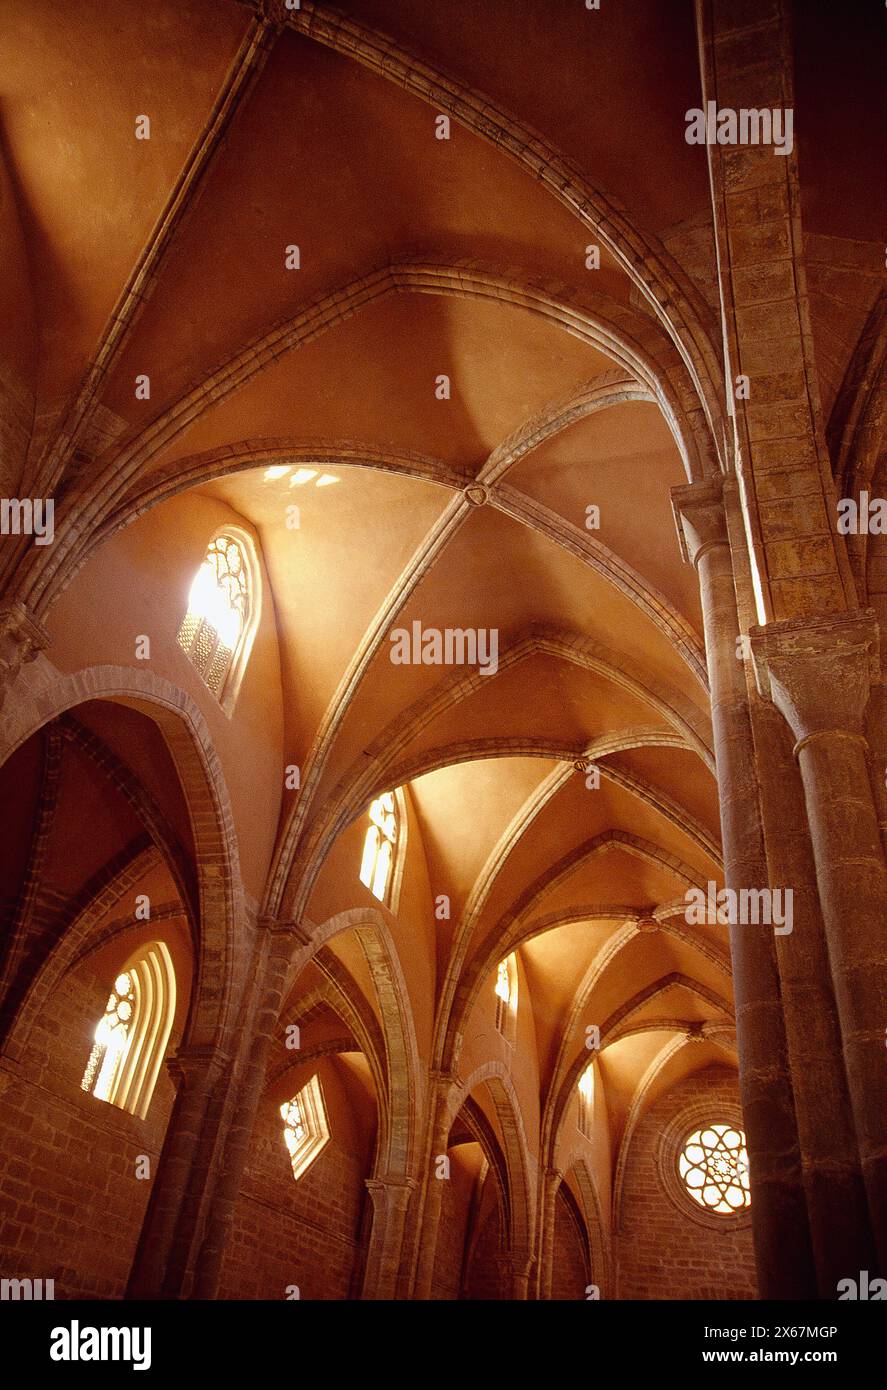 Vault. Rueda monastery, Escatron, Zaragoza province, Aragon, Spain. Stock Photo